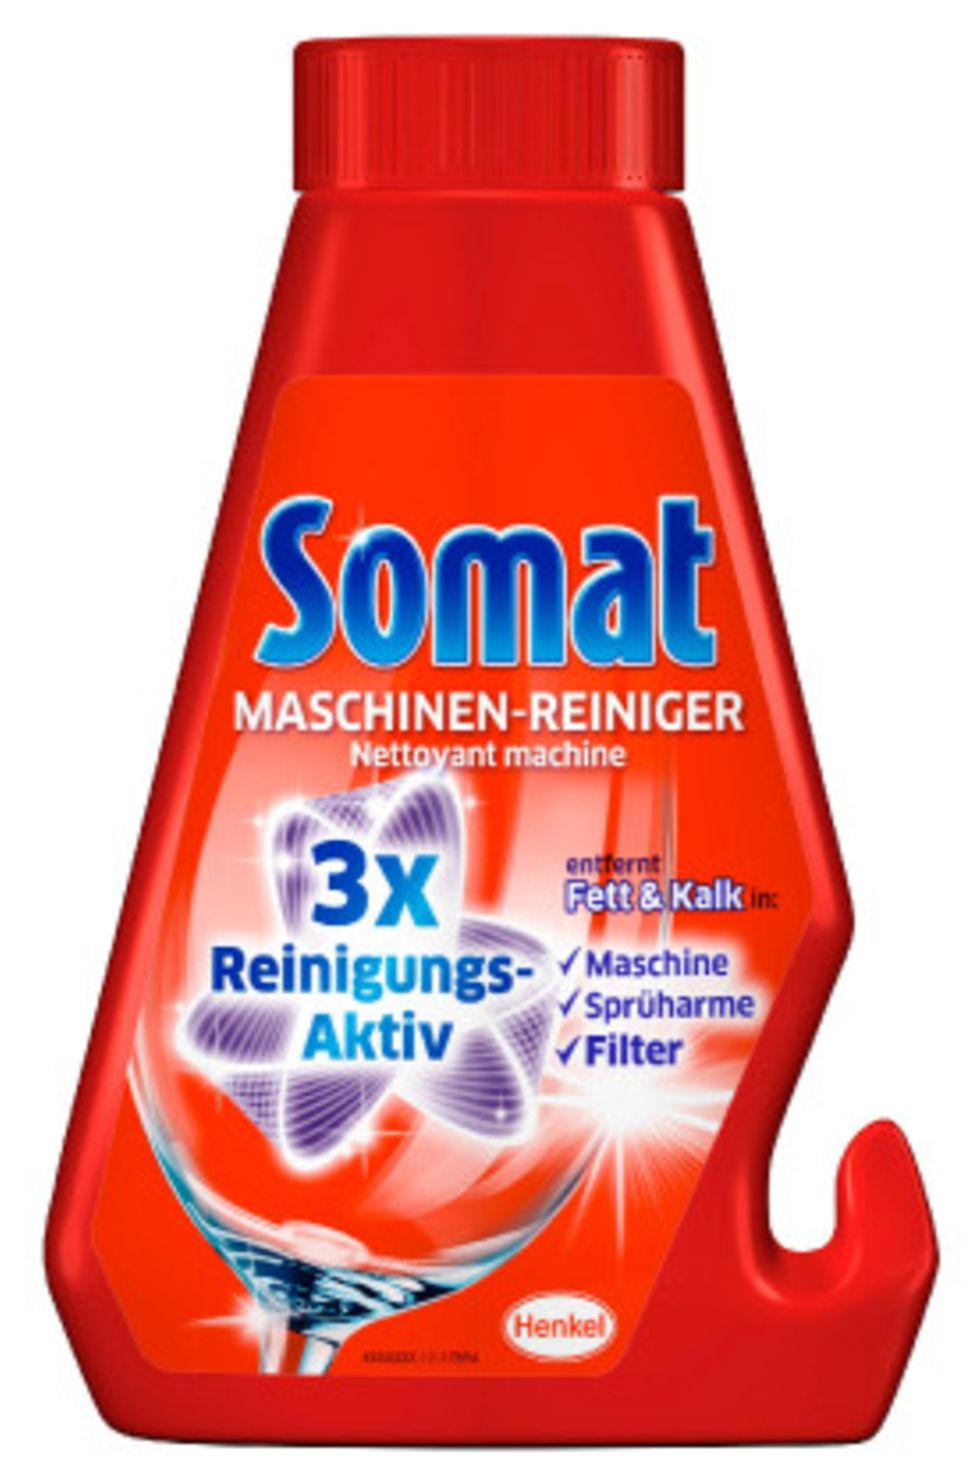 Somat "Maschinen-Reiniger 3x Reinigungs-Aktiv"